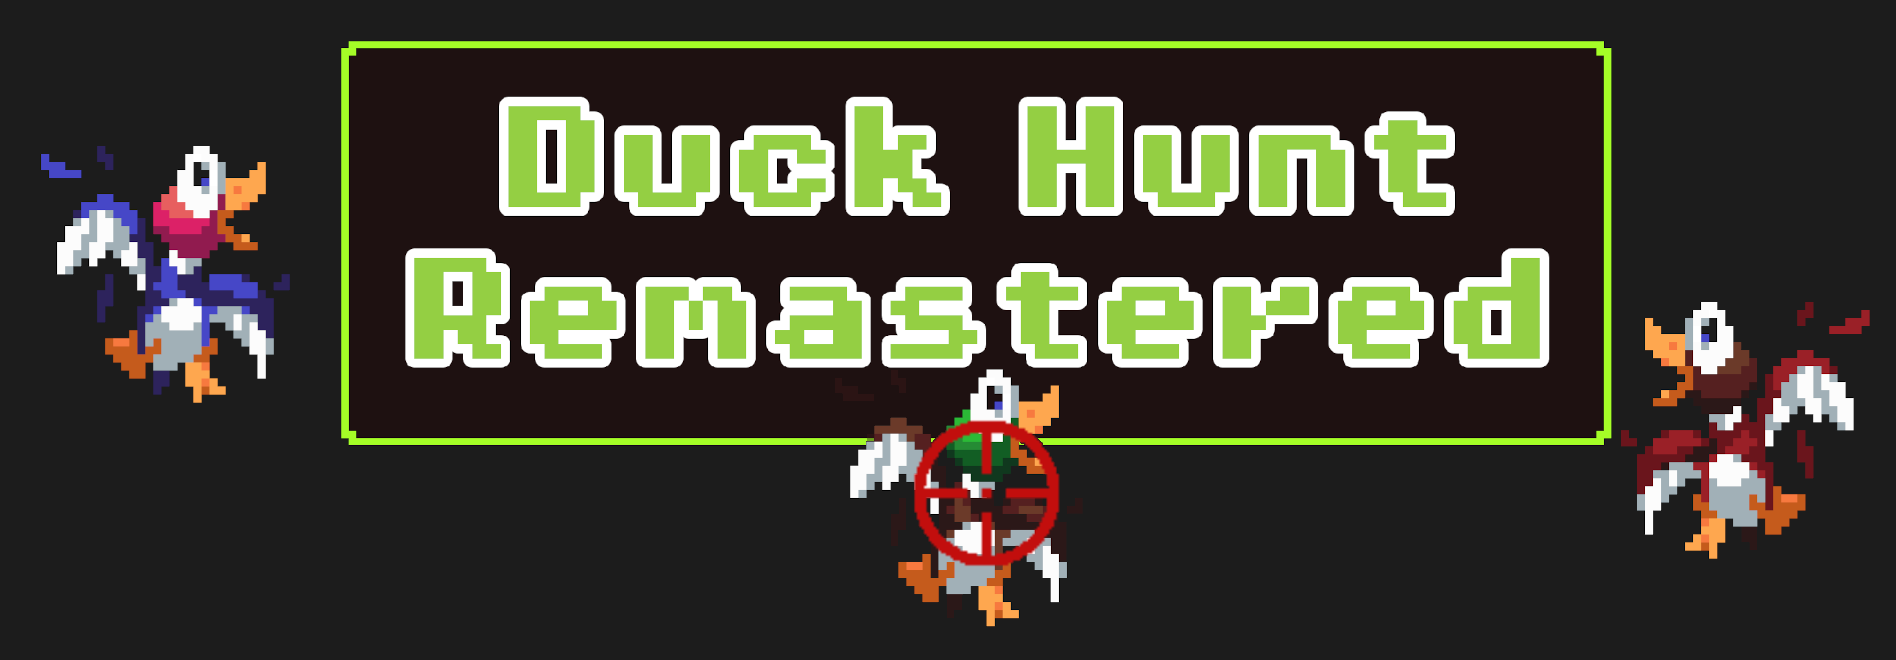 Duck Hunt Remastered